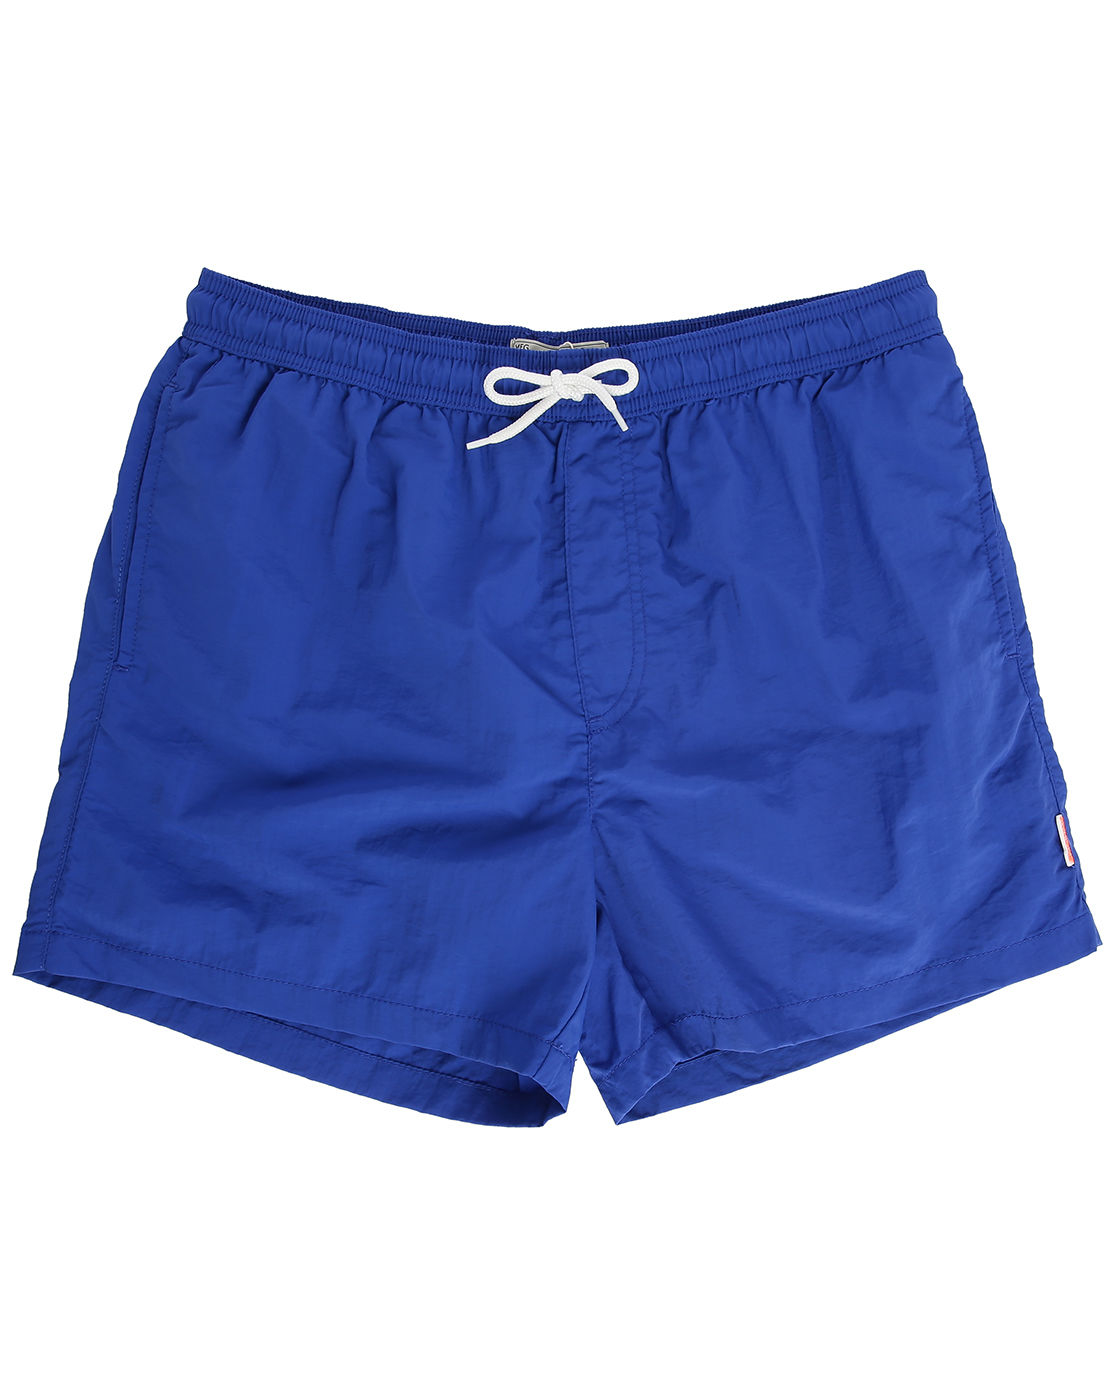 Jack & jones Royal Blue Jj Malibu Swim Shorts in Blue for Men | Lyst